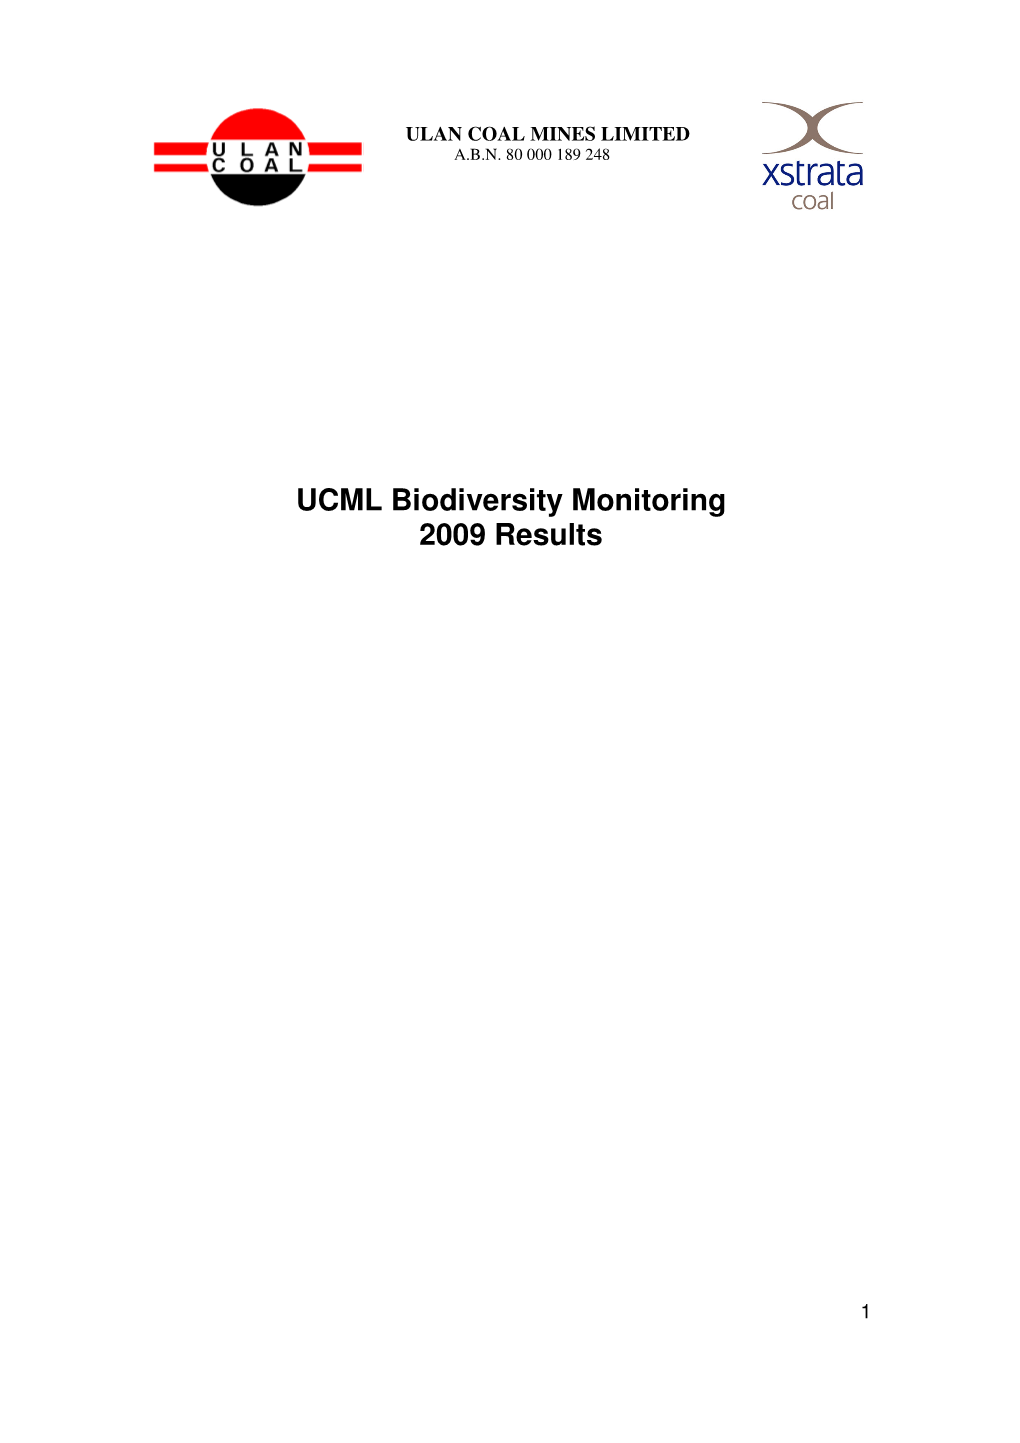 UCML Biodiversity Monitoring 2009 Results